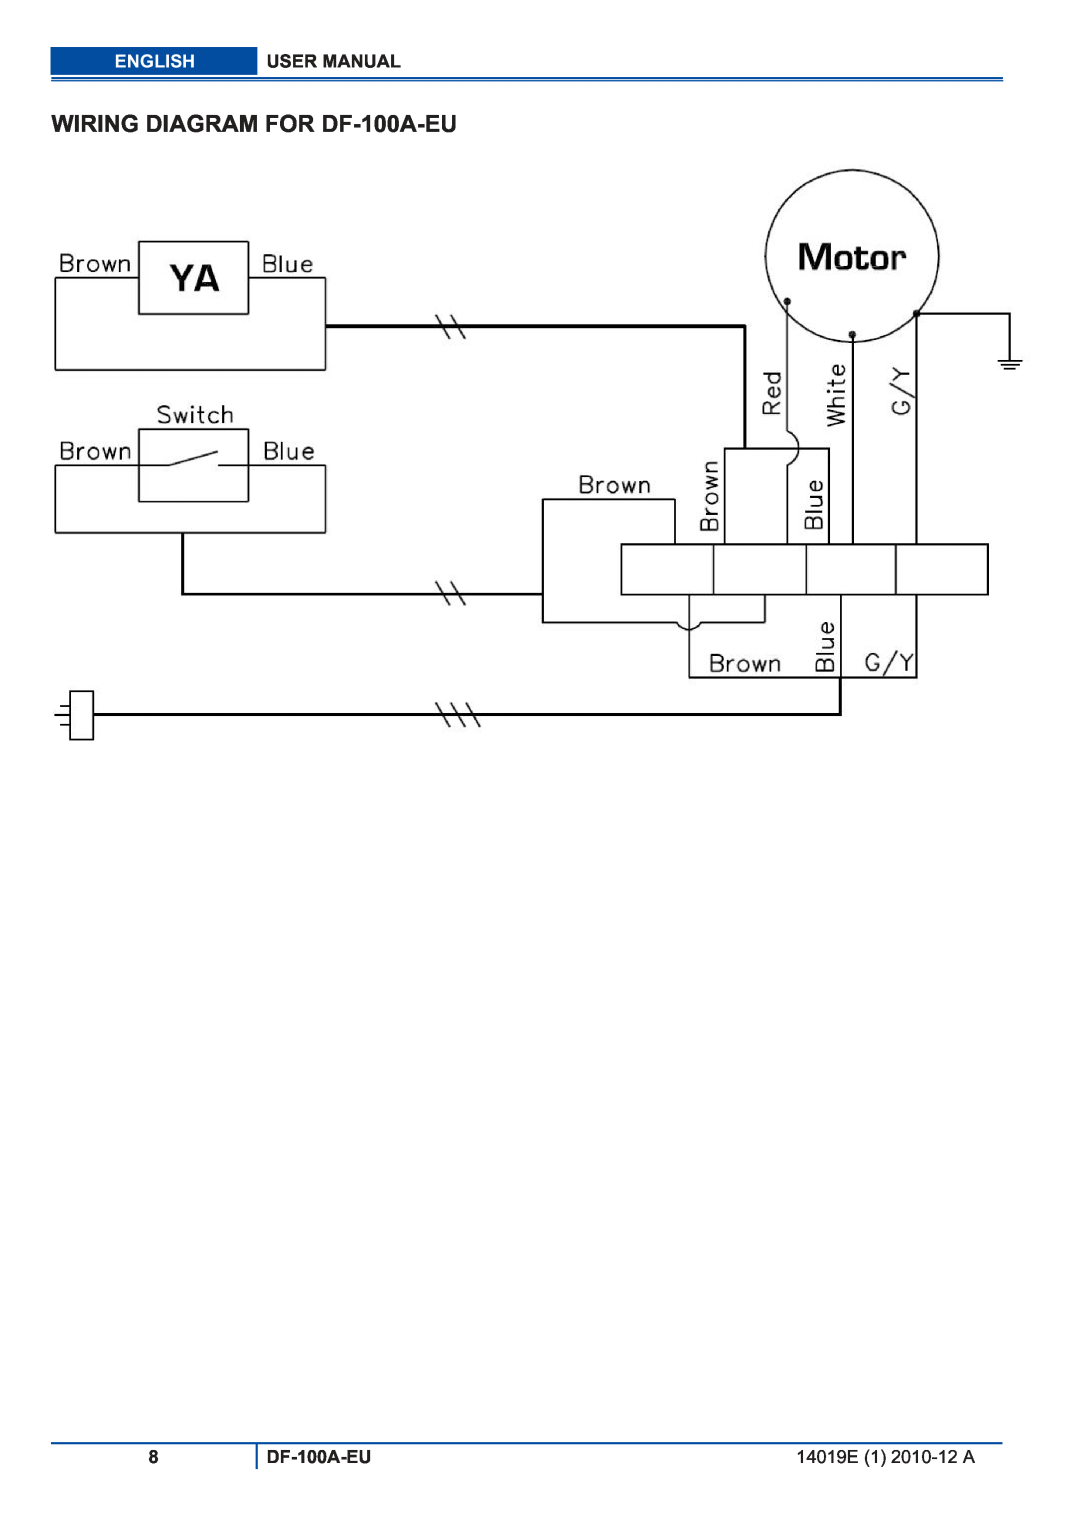 Viper user manual WIRING DIAGRAM FOR DF-100A-EU, English 